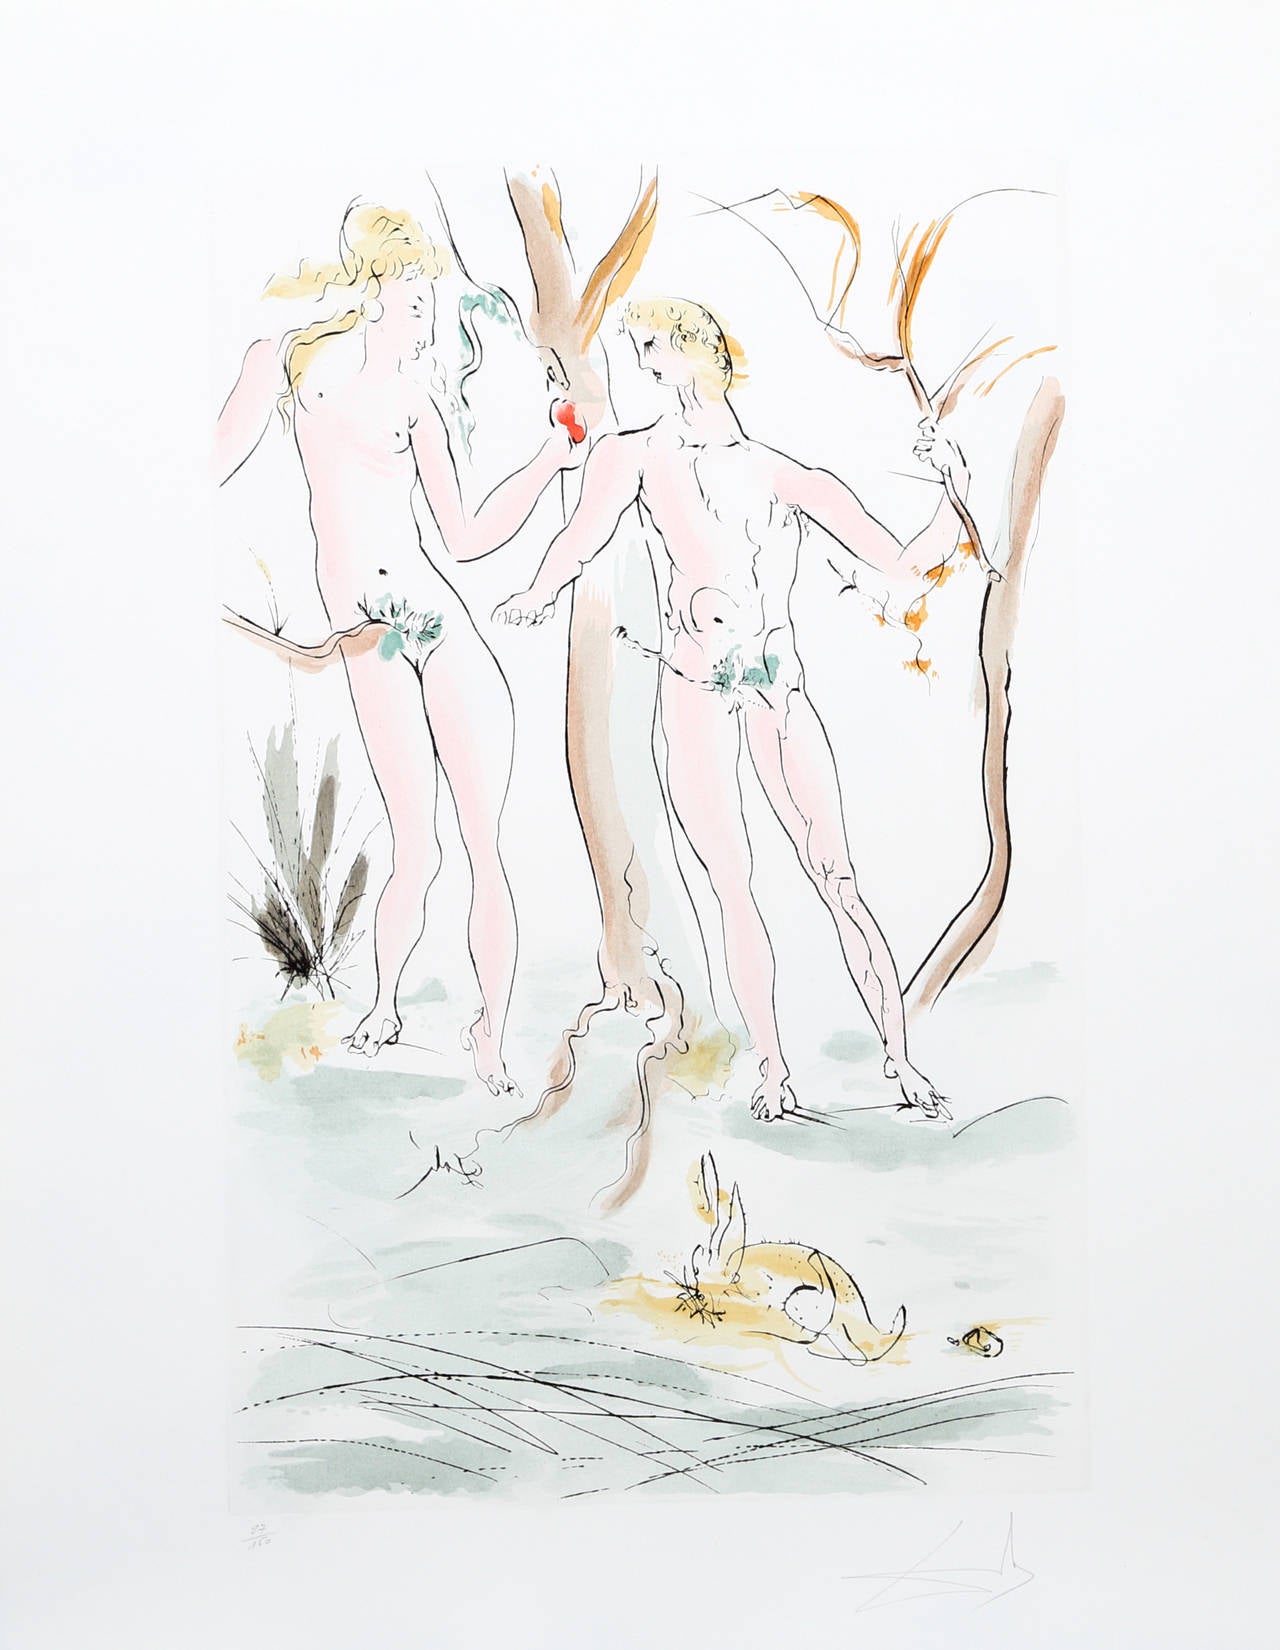 Adam et Eve, Etching by Salvador Dali 1971